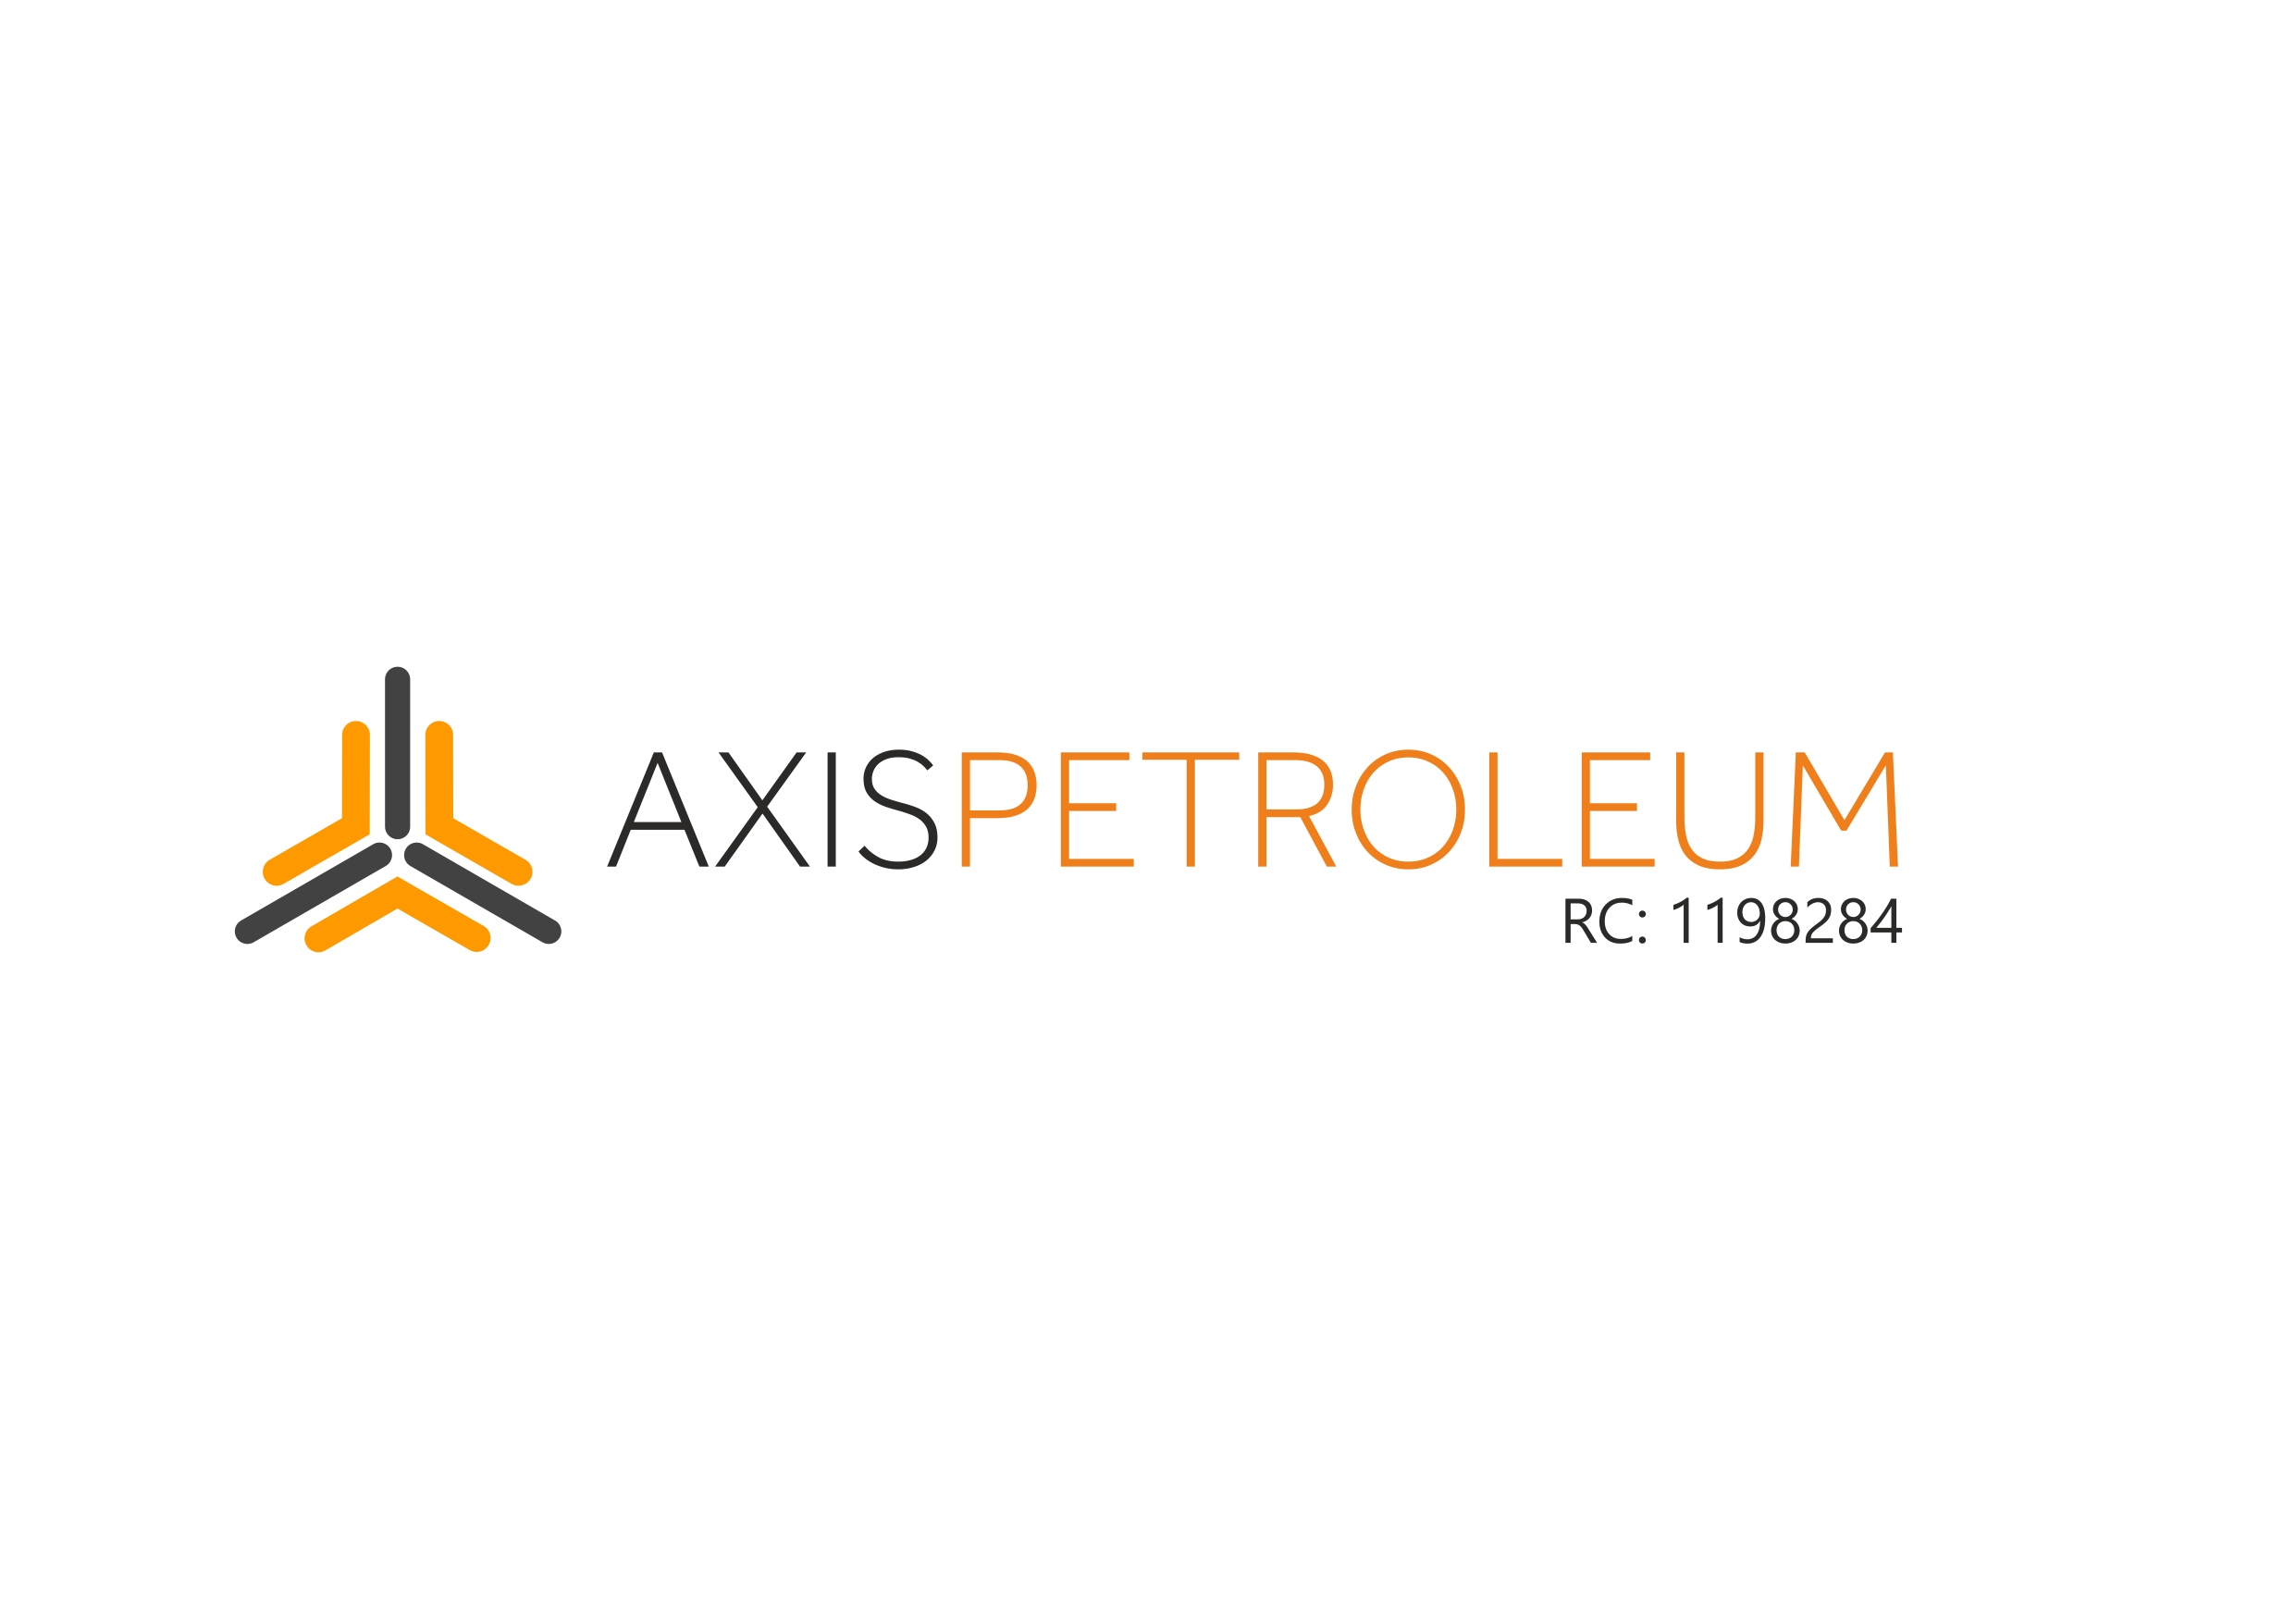 Axis Petroleum